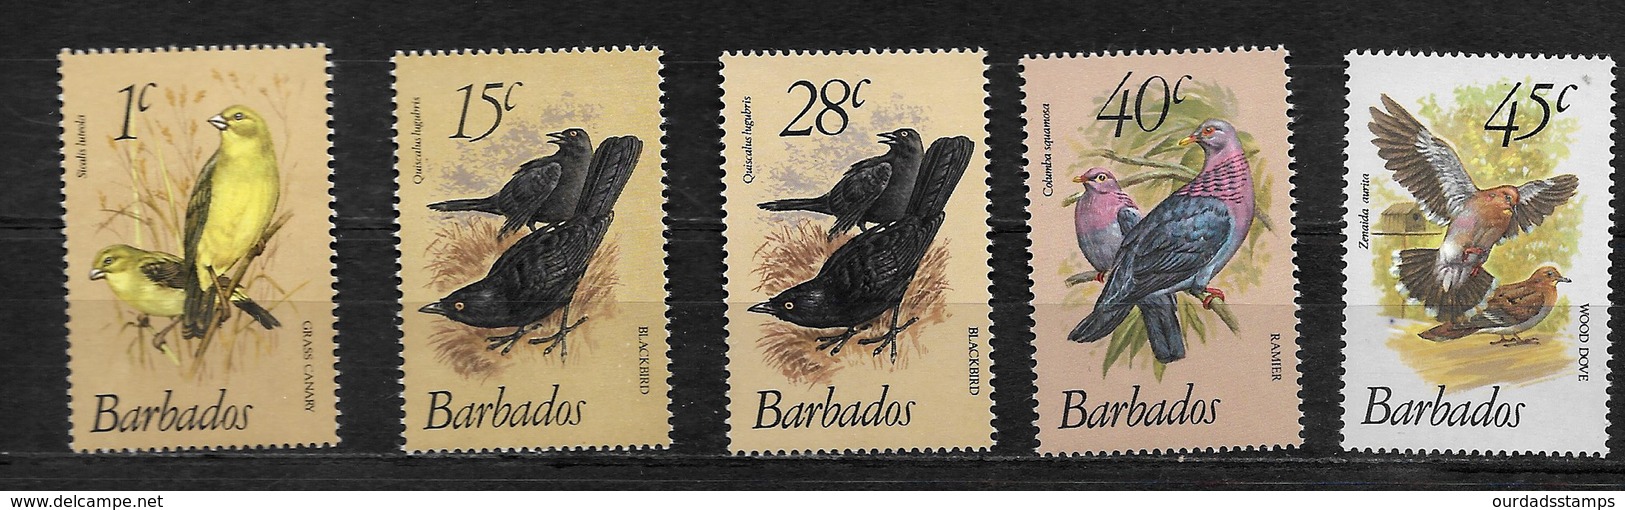 Barbados QEII 1979 Birds,, Small Selection To 70c MNH (7203) - Barbados (1966-...)